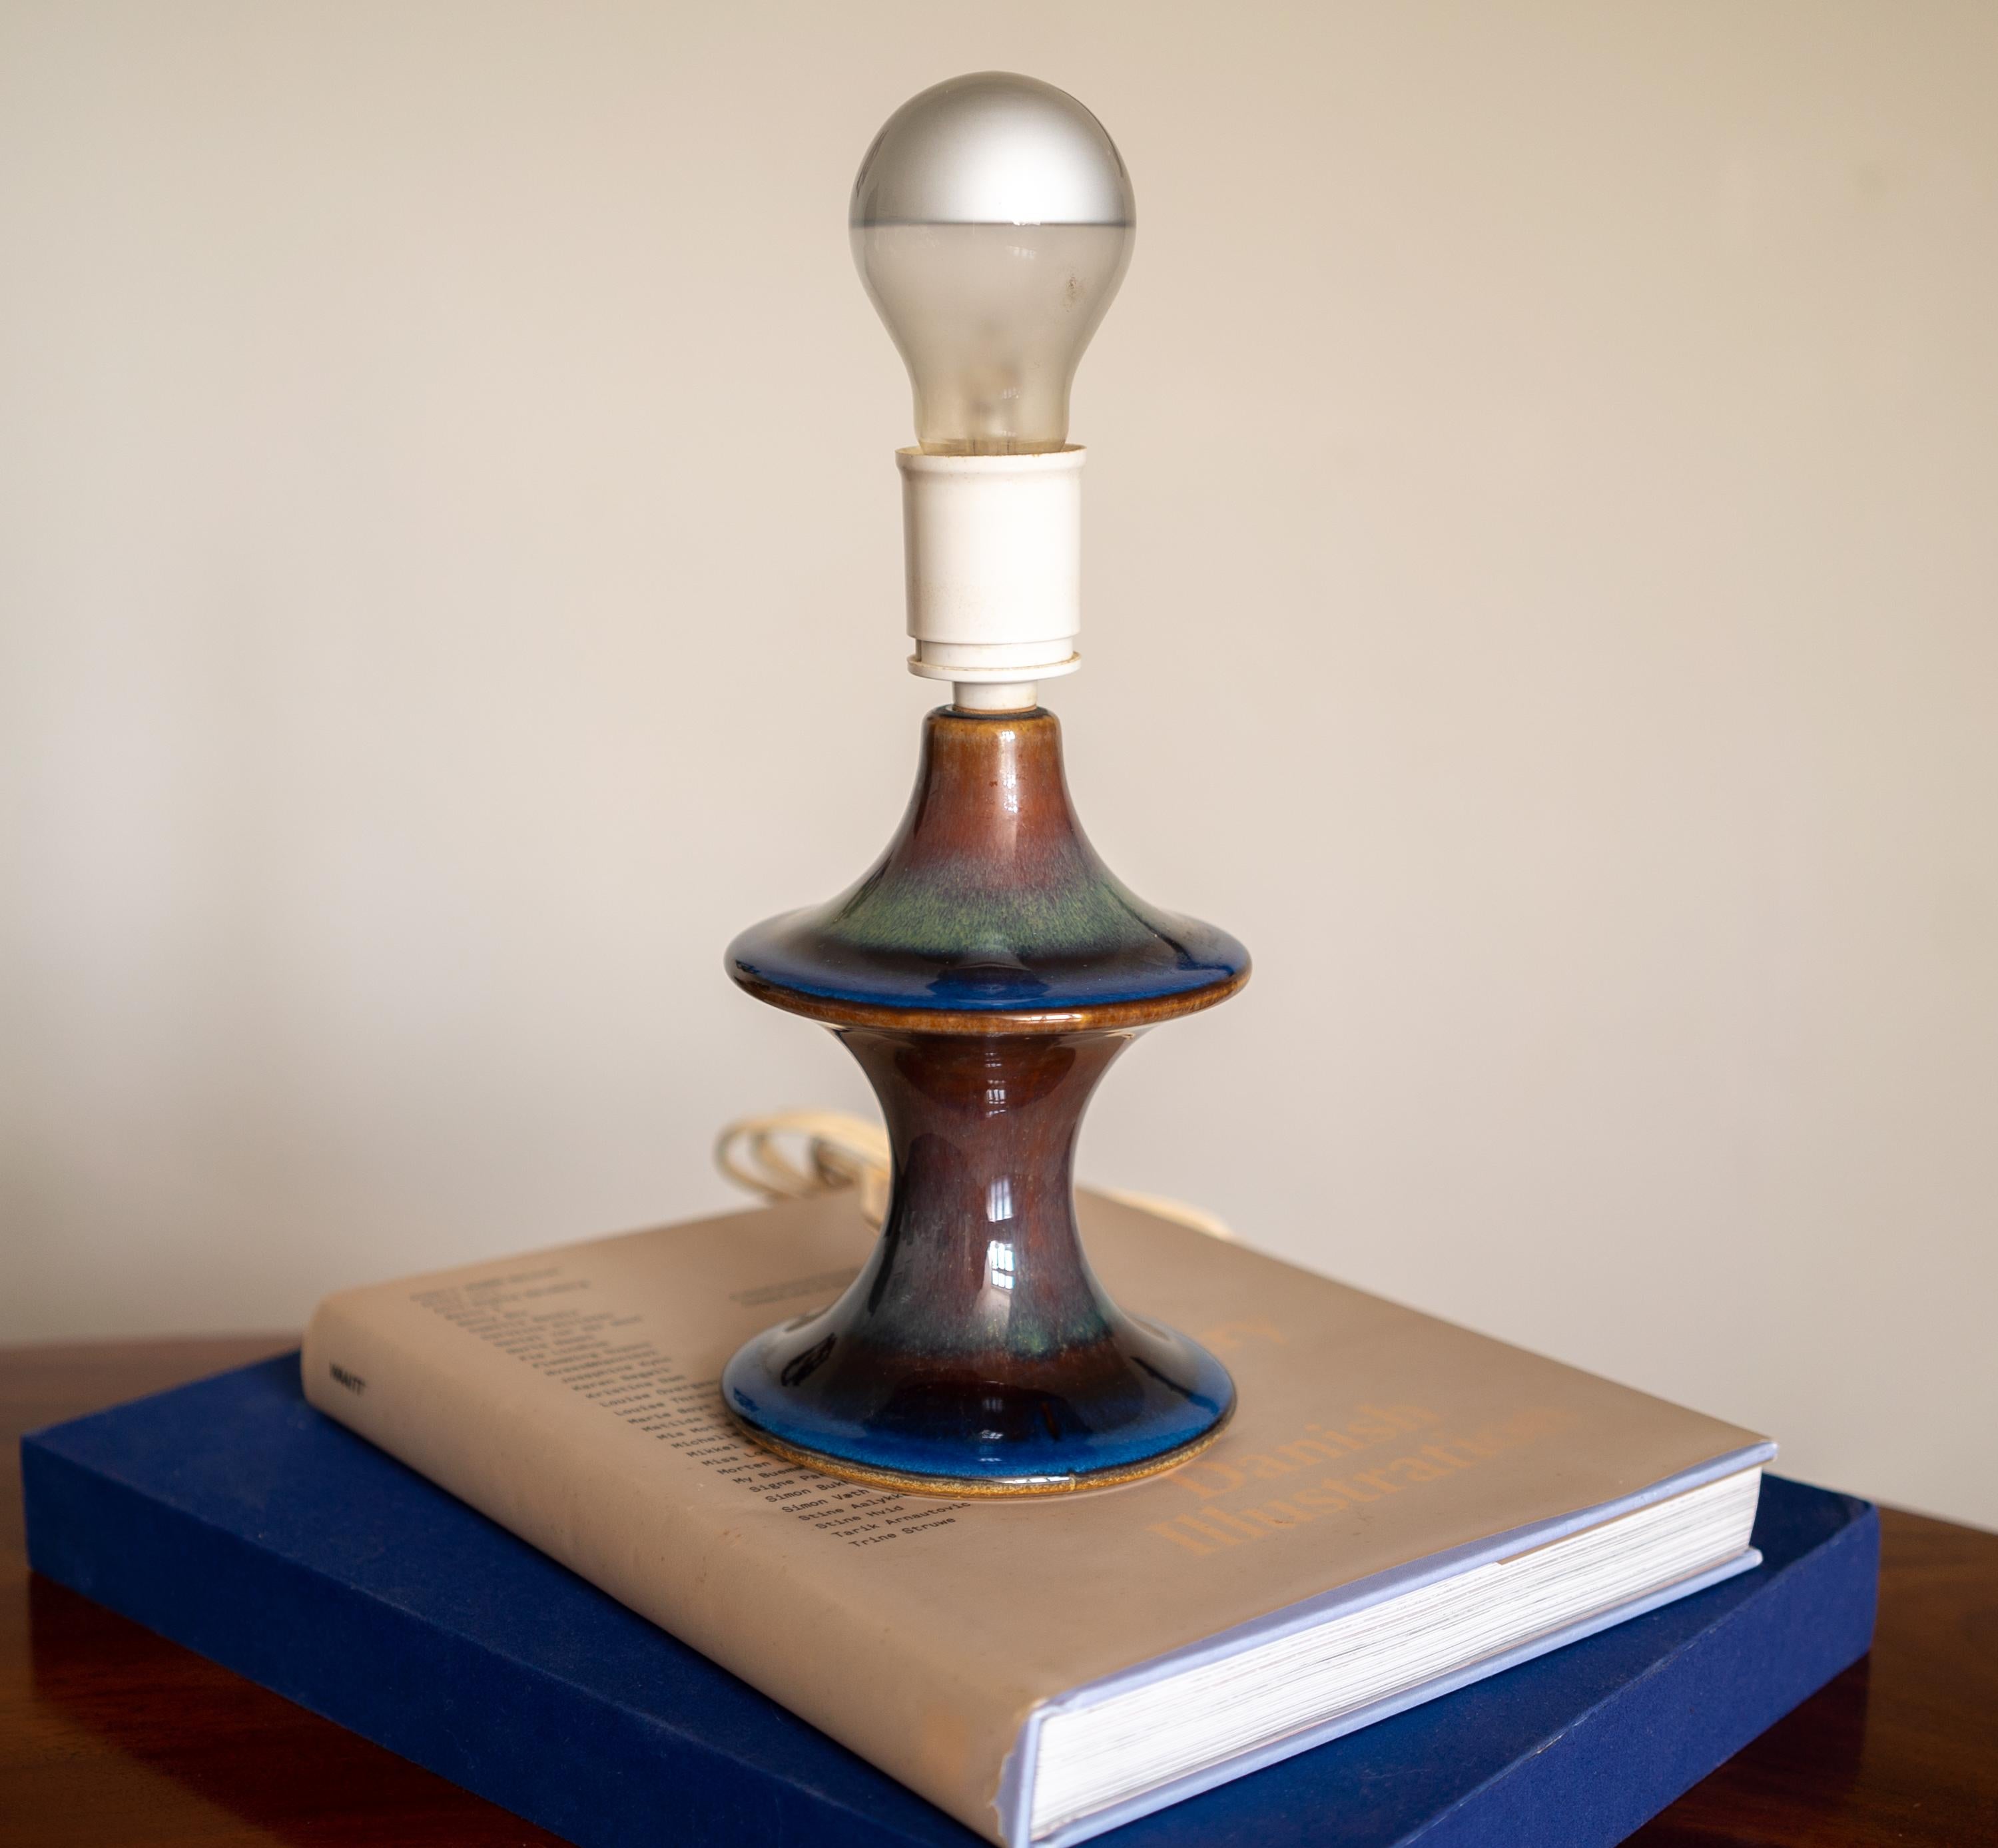 20th Century Søholm Table Lamp, Blue-Glazed Stoneware, Bornholm, Denmark, c. 1970s For Sale